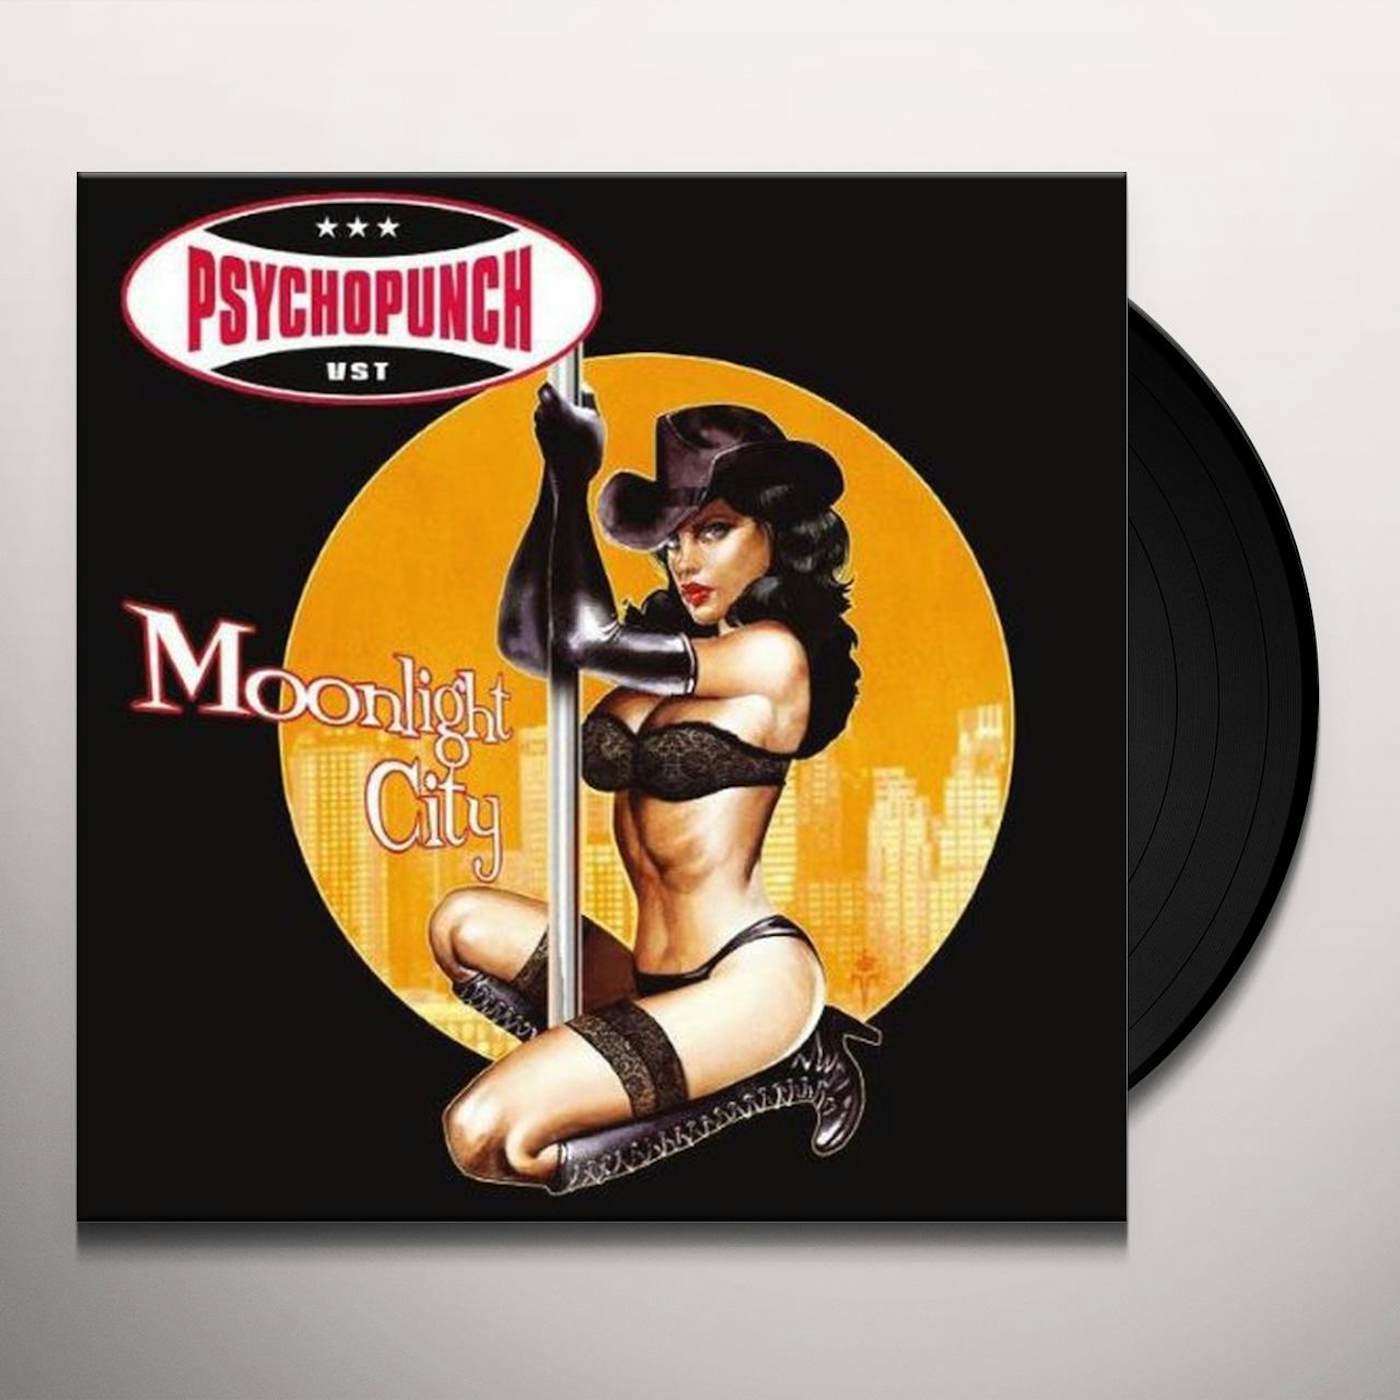 Psychopunch Moonlight City Vinyl Record